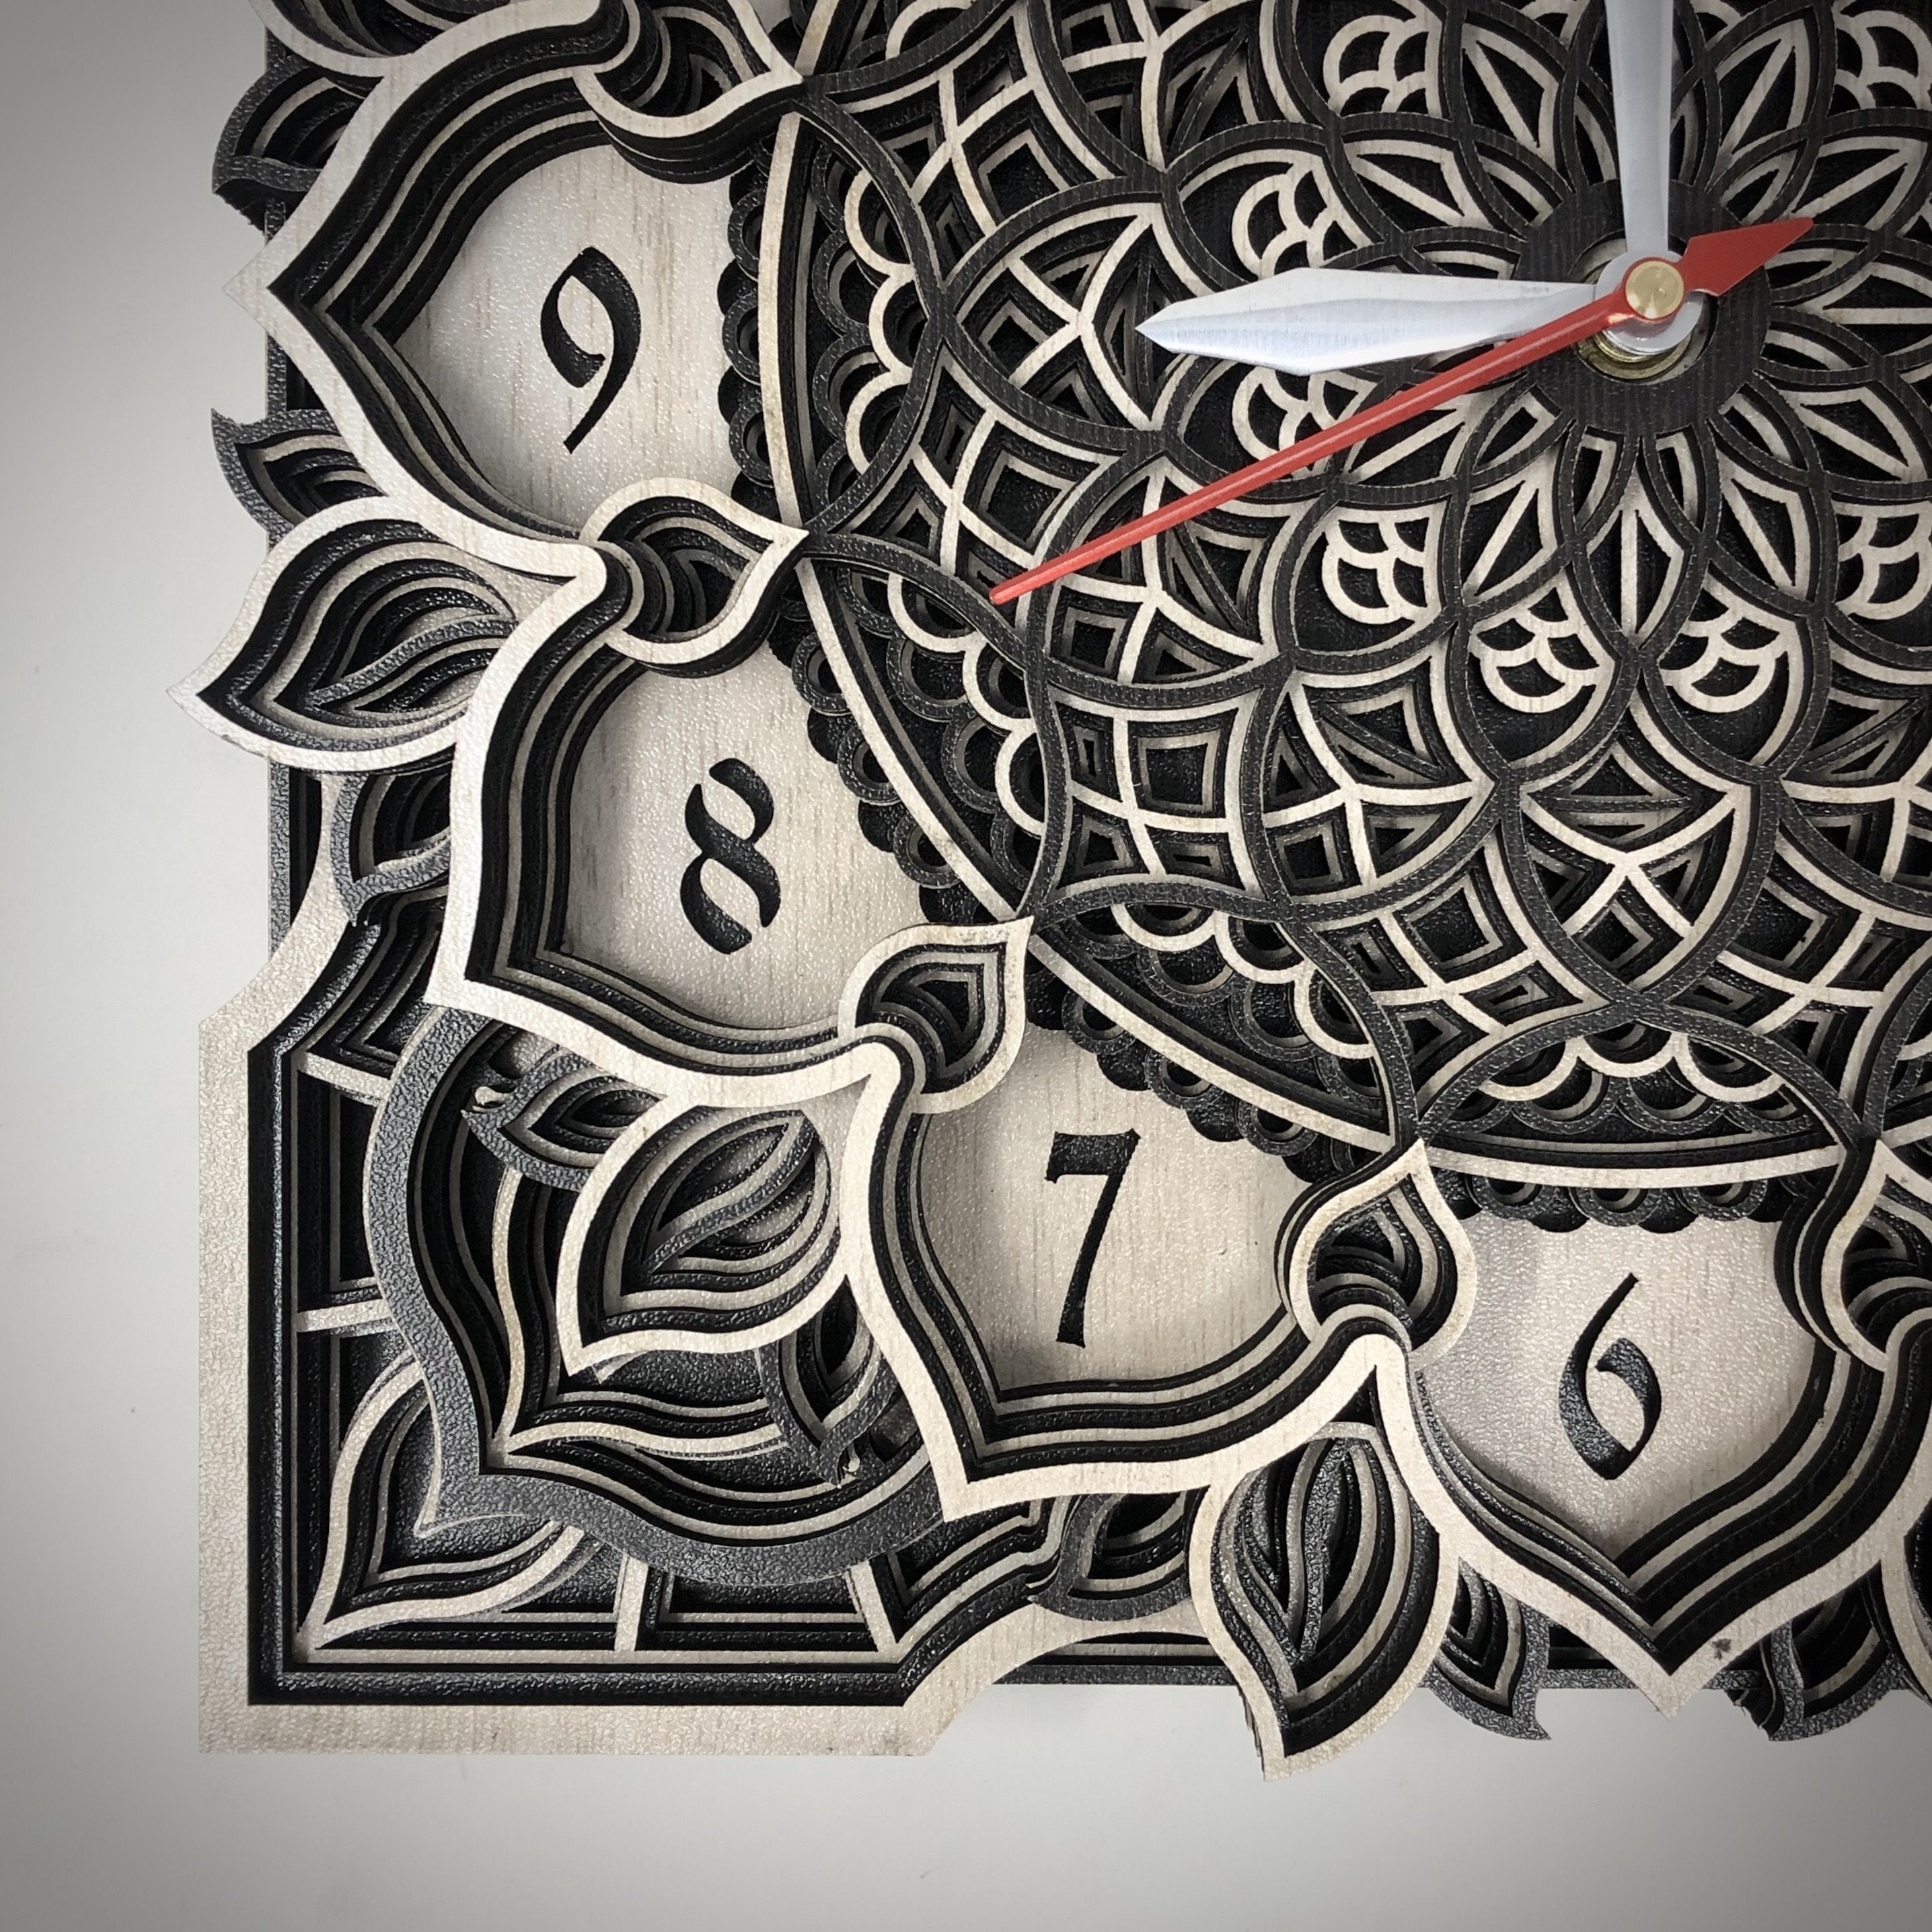 Tortuous 3D Multilayered Mandala Wall Clock